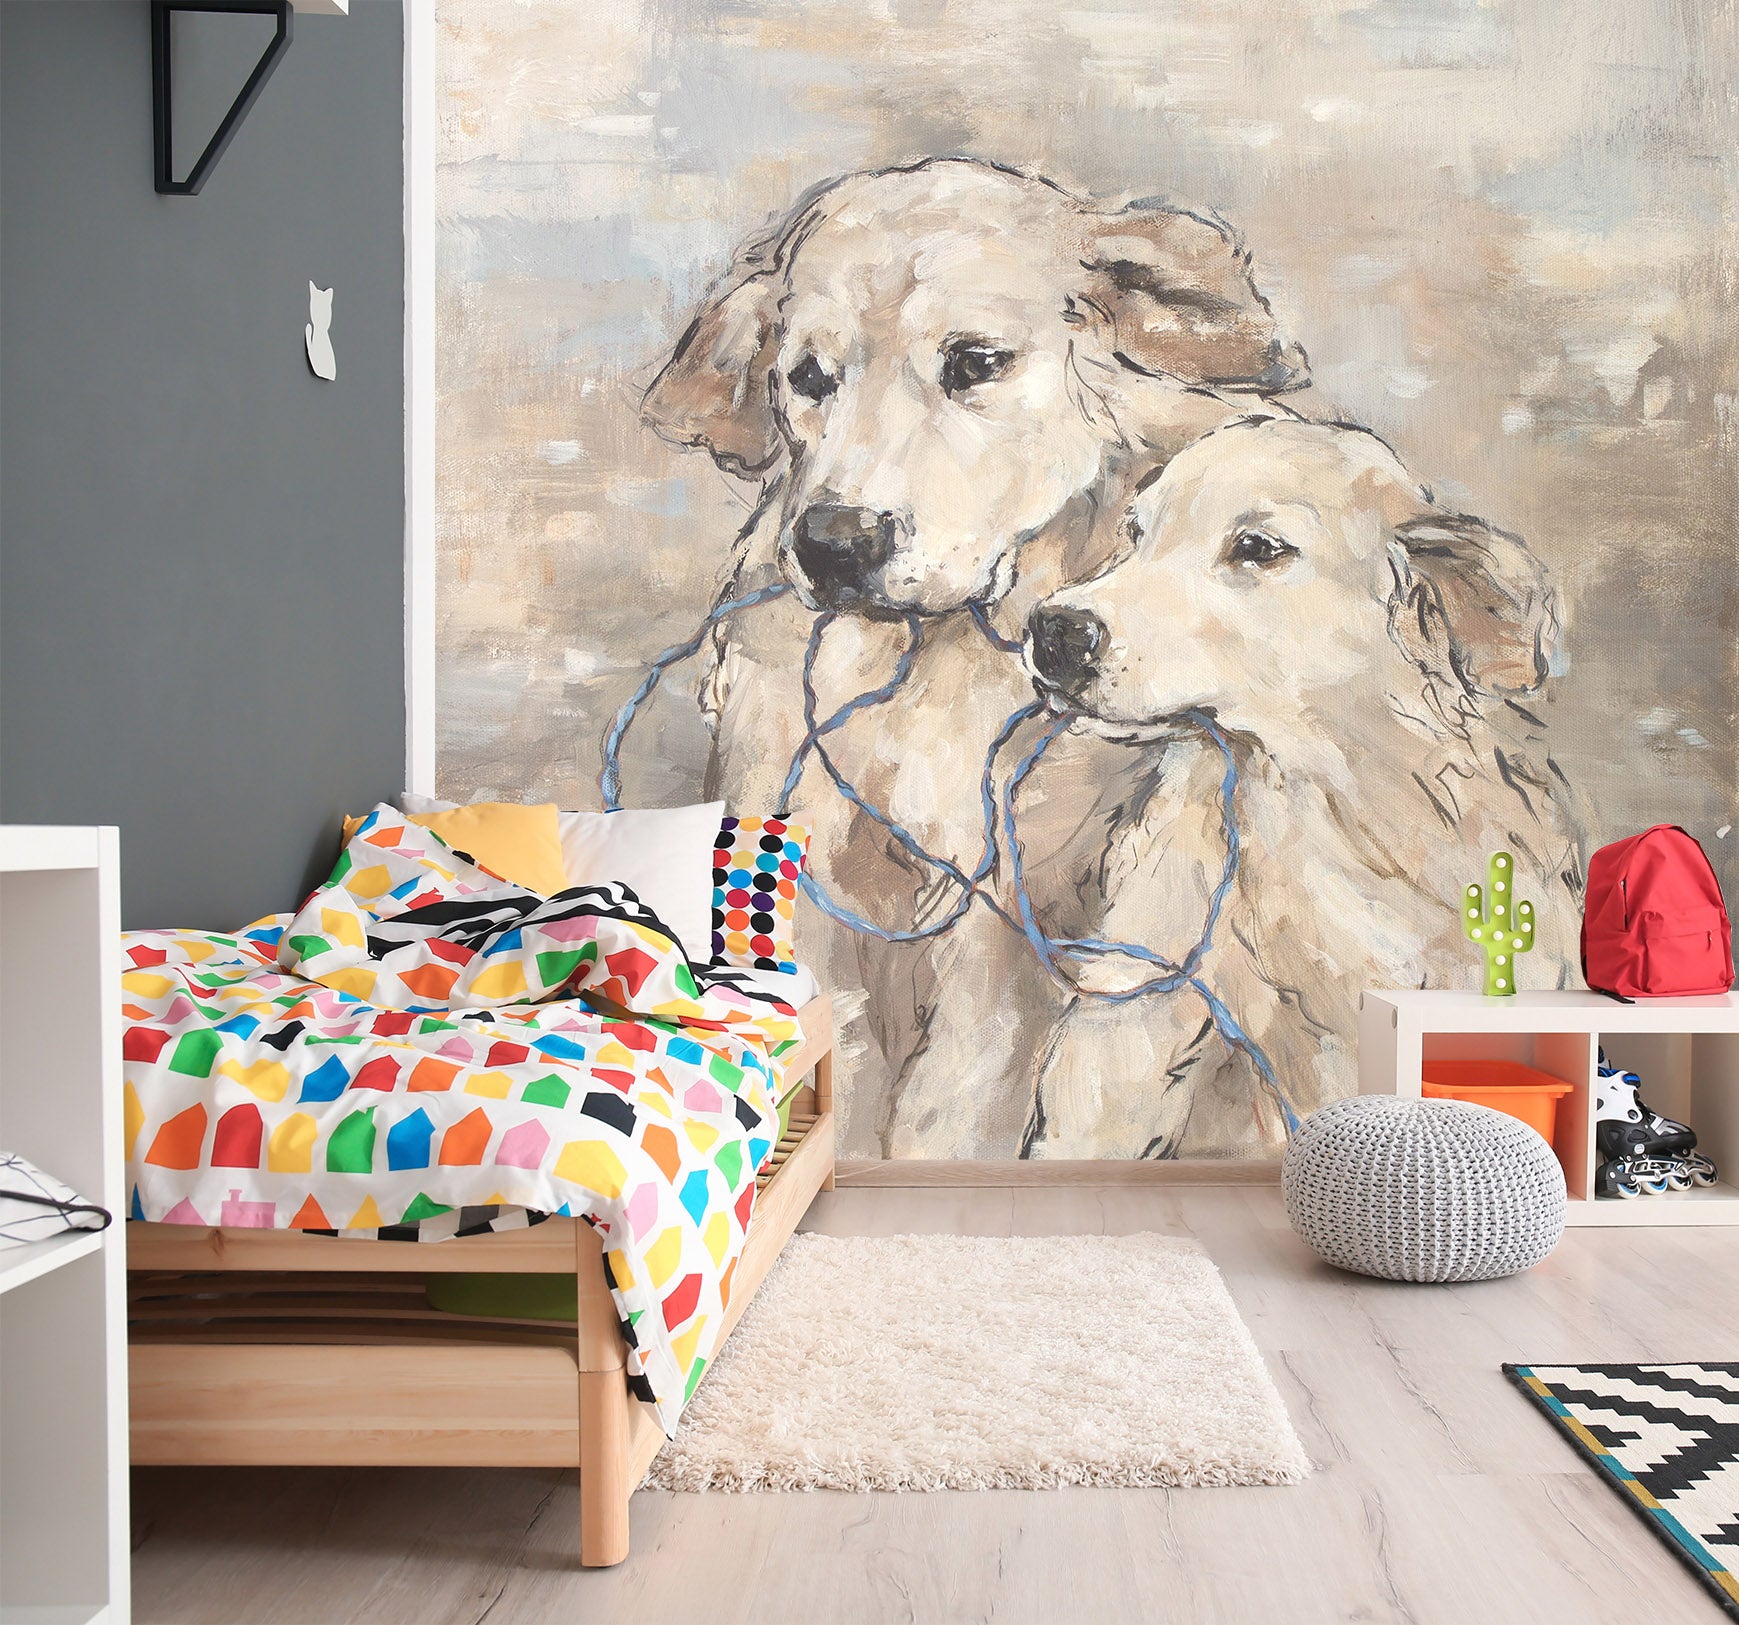 3D Dogs 3105 Debi Coules Wall Mural Wall Murals